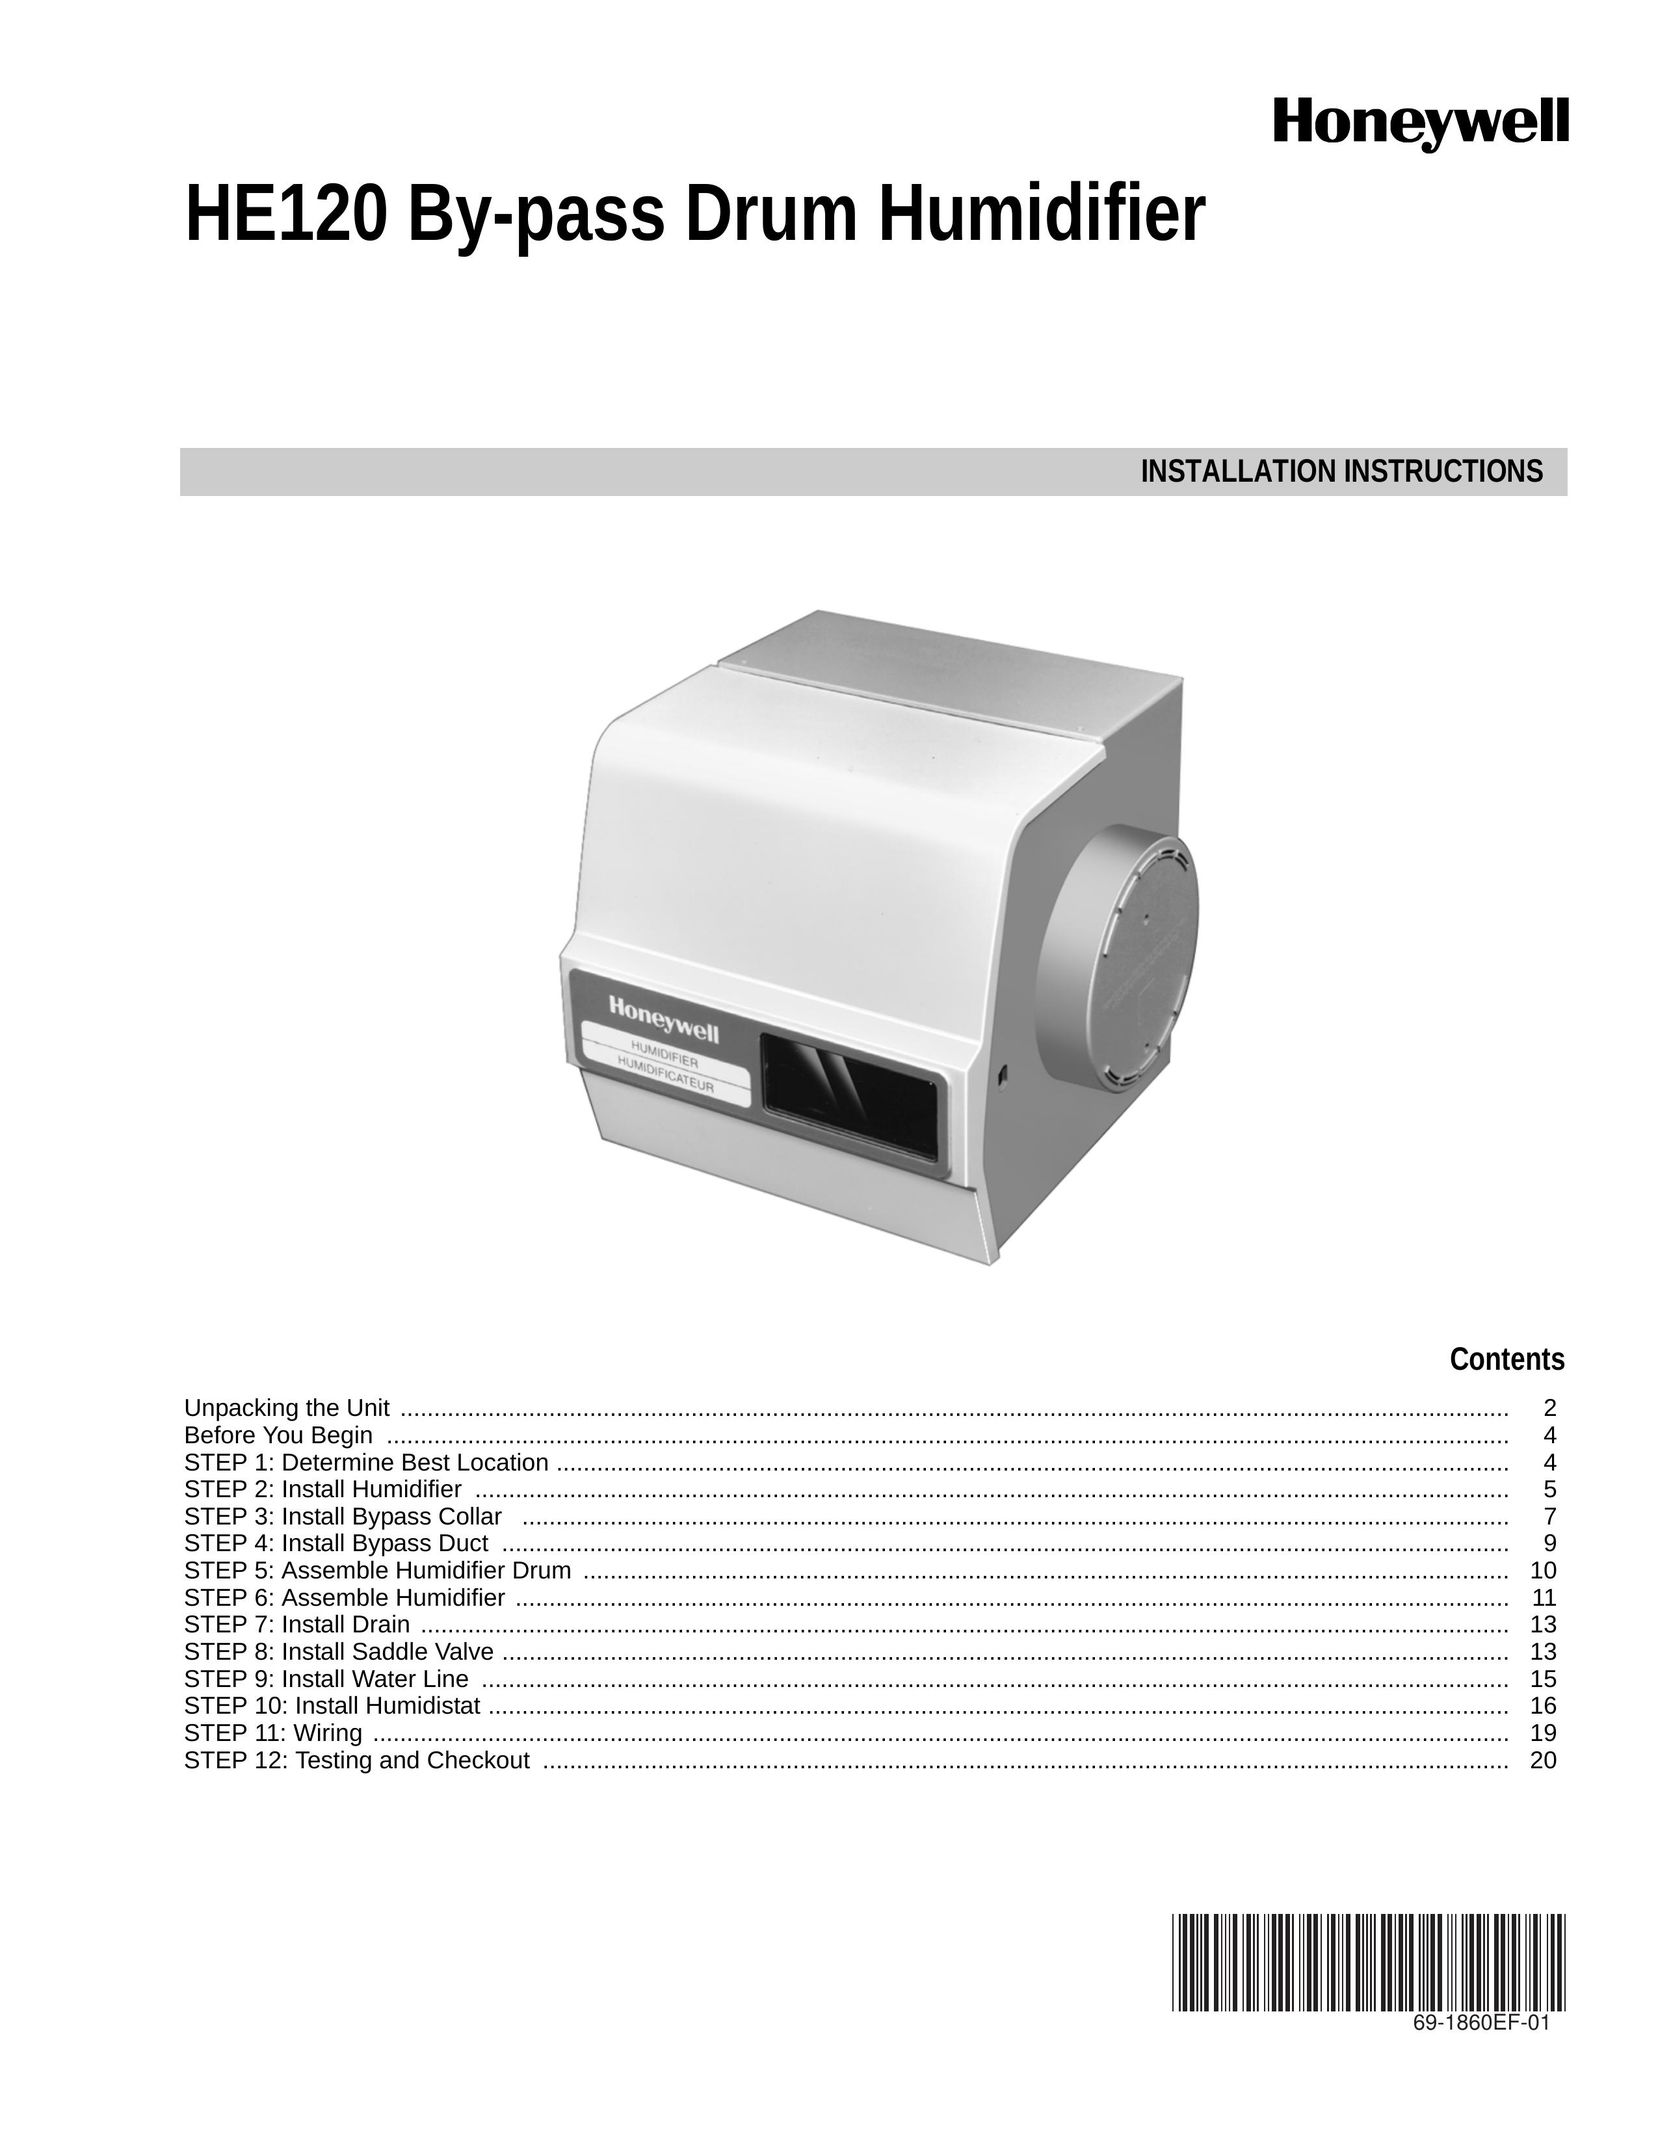 Honeywell HE120 Humidifier User Manual